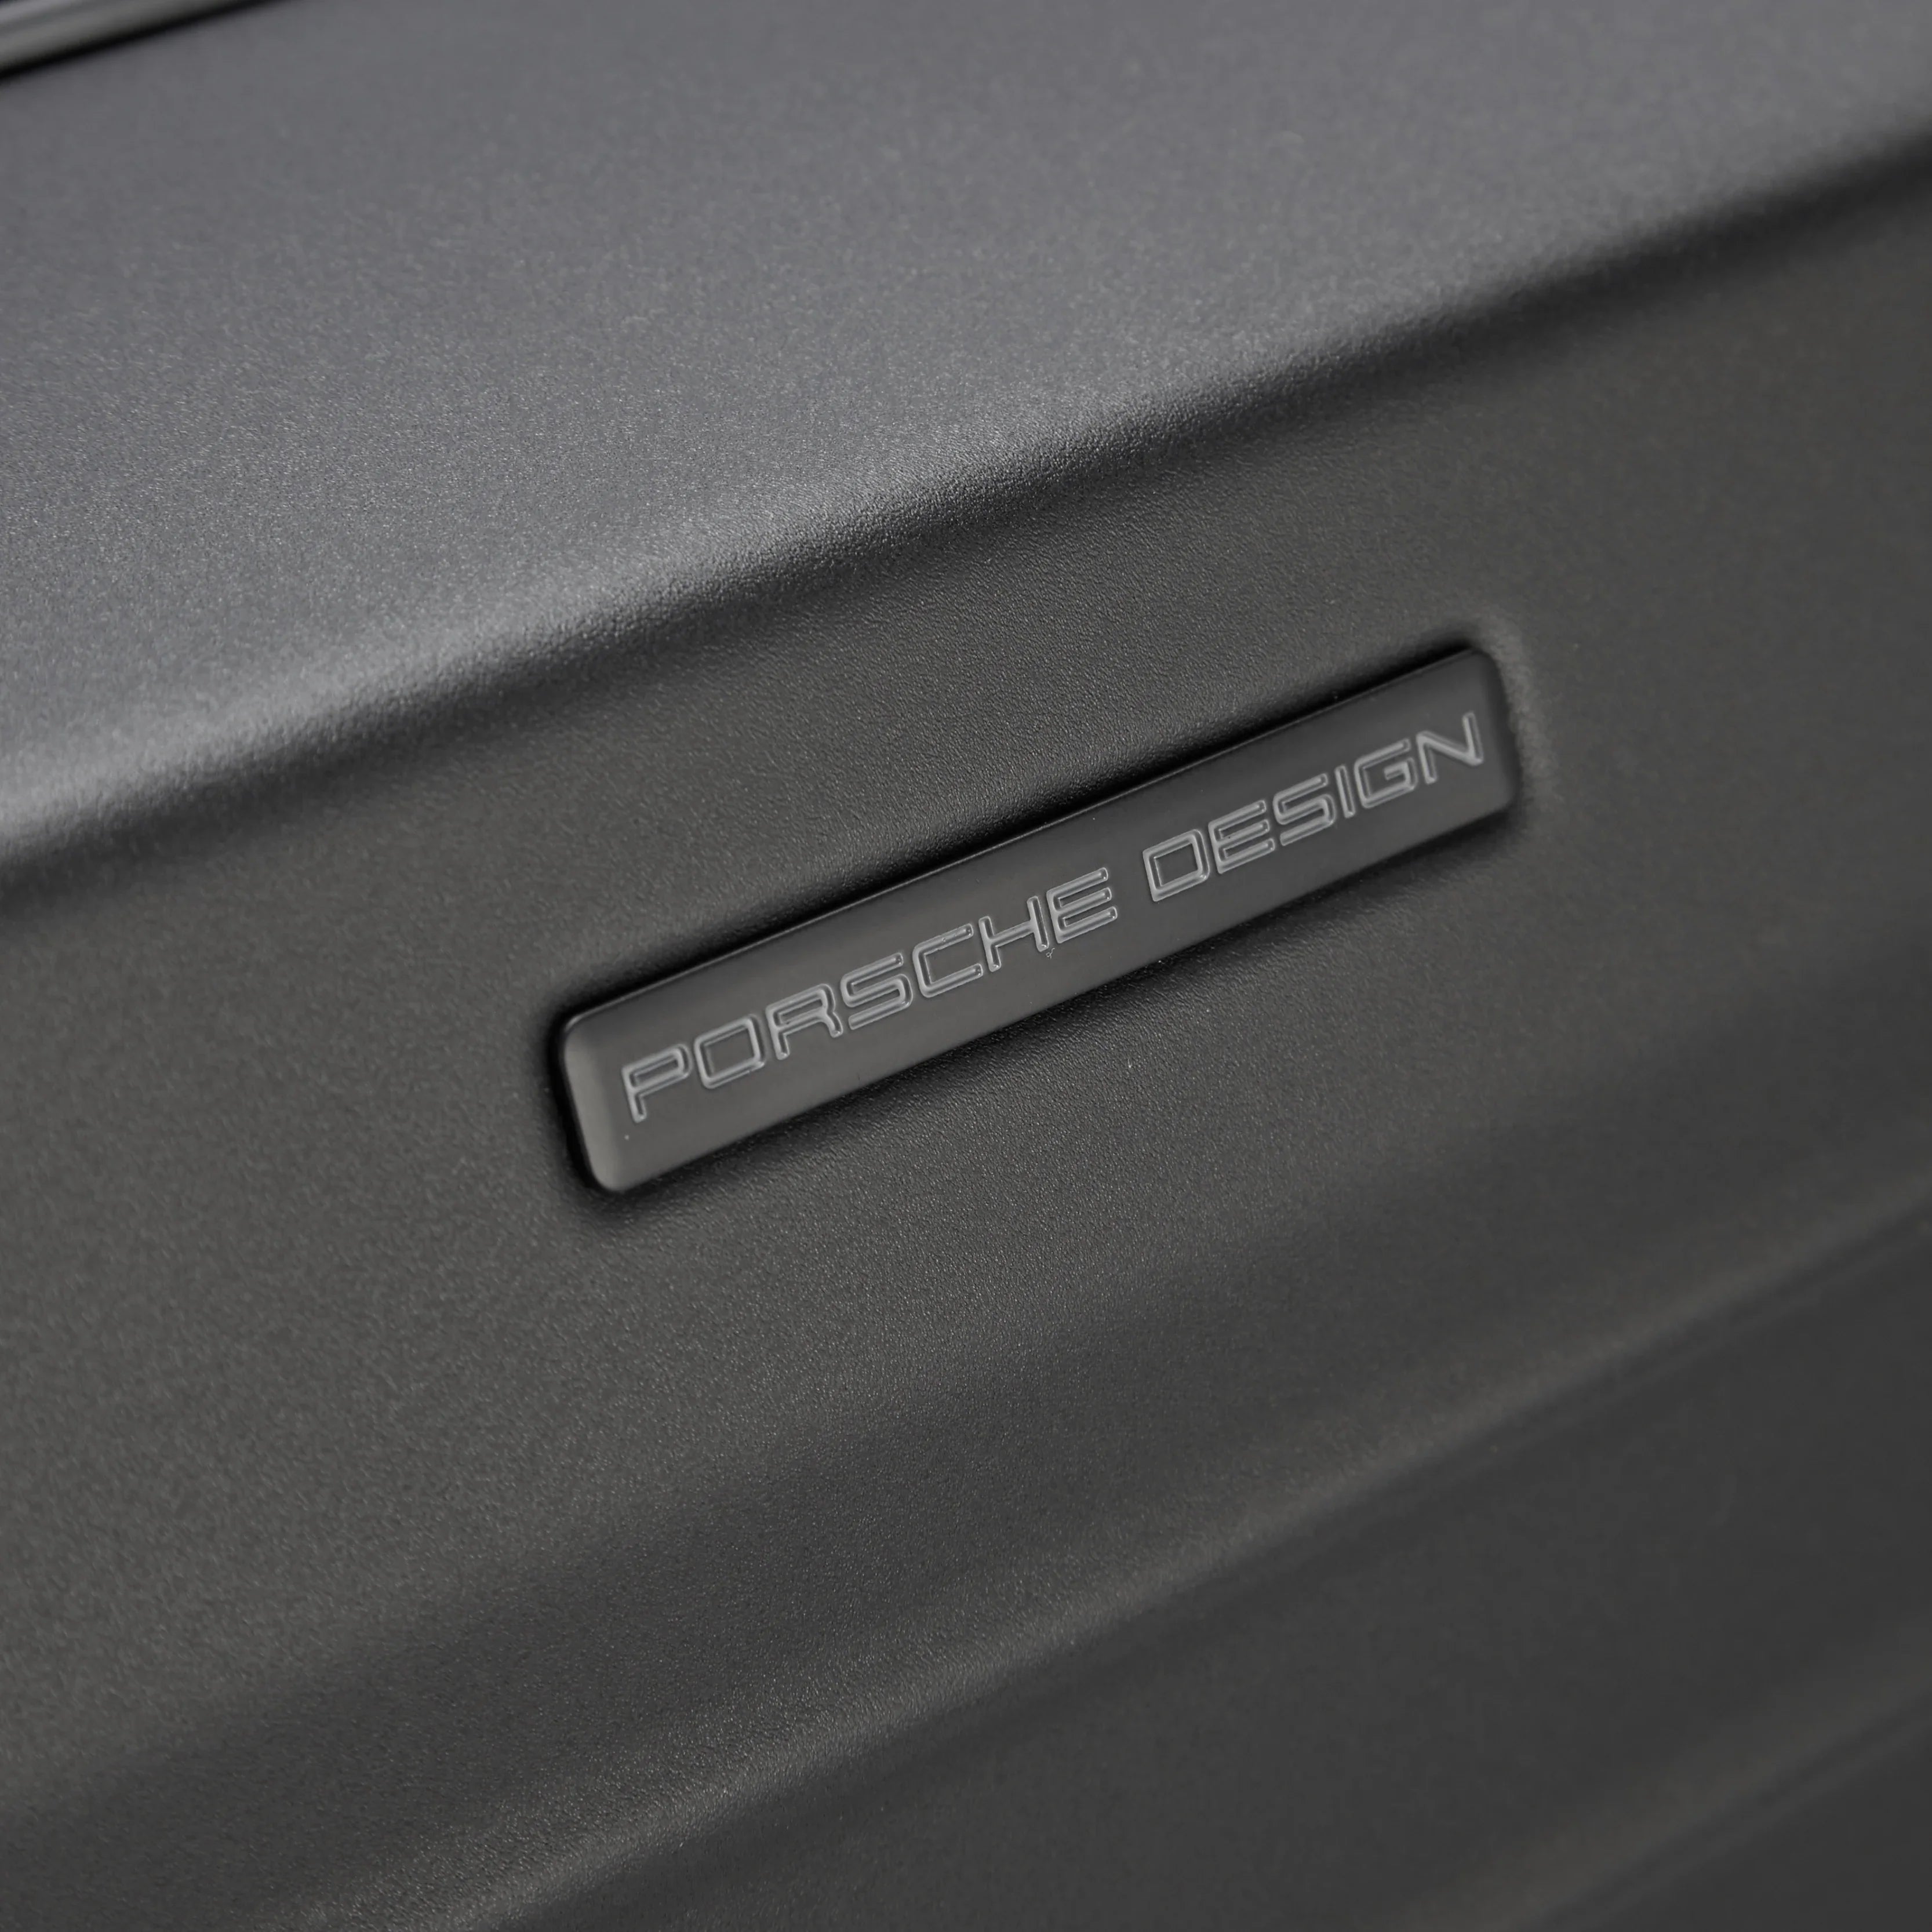 Porsche Design Roadster Hardcase Valise 4 roues 78 cm - Noir Mat